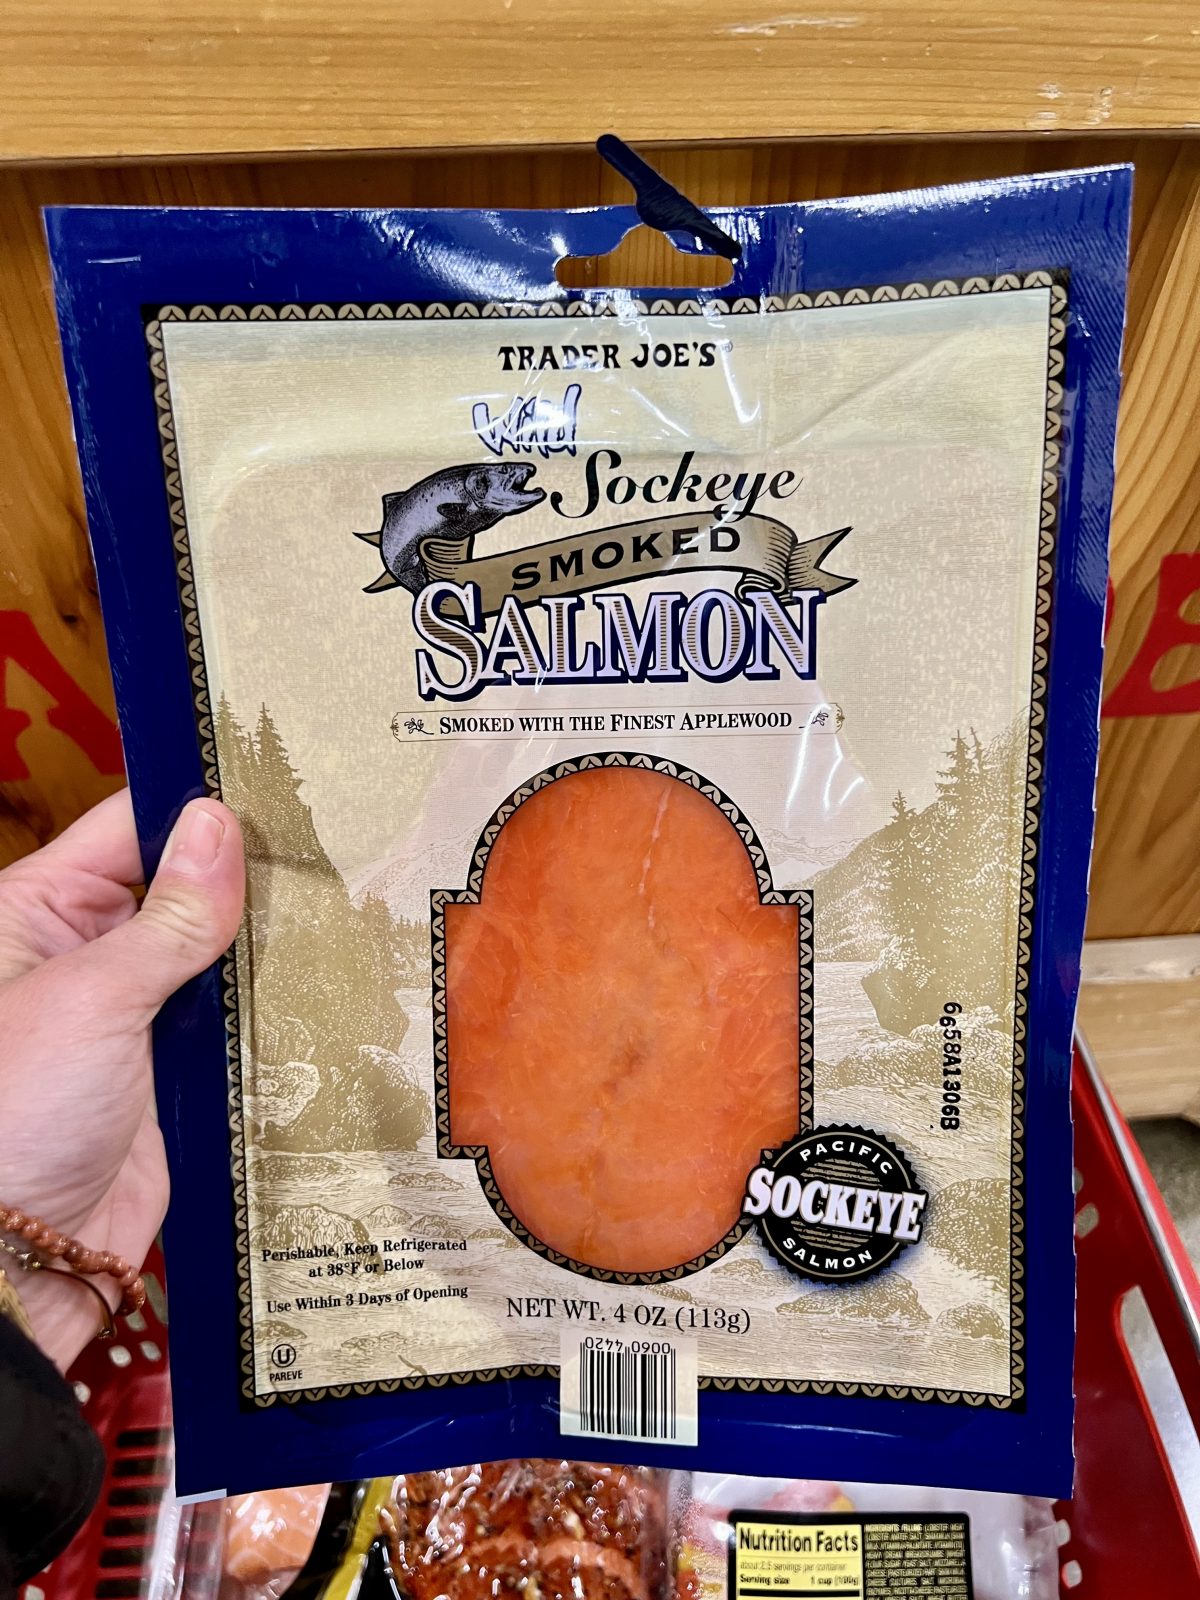 Trader Joes smoked sockeye salmon